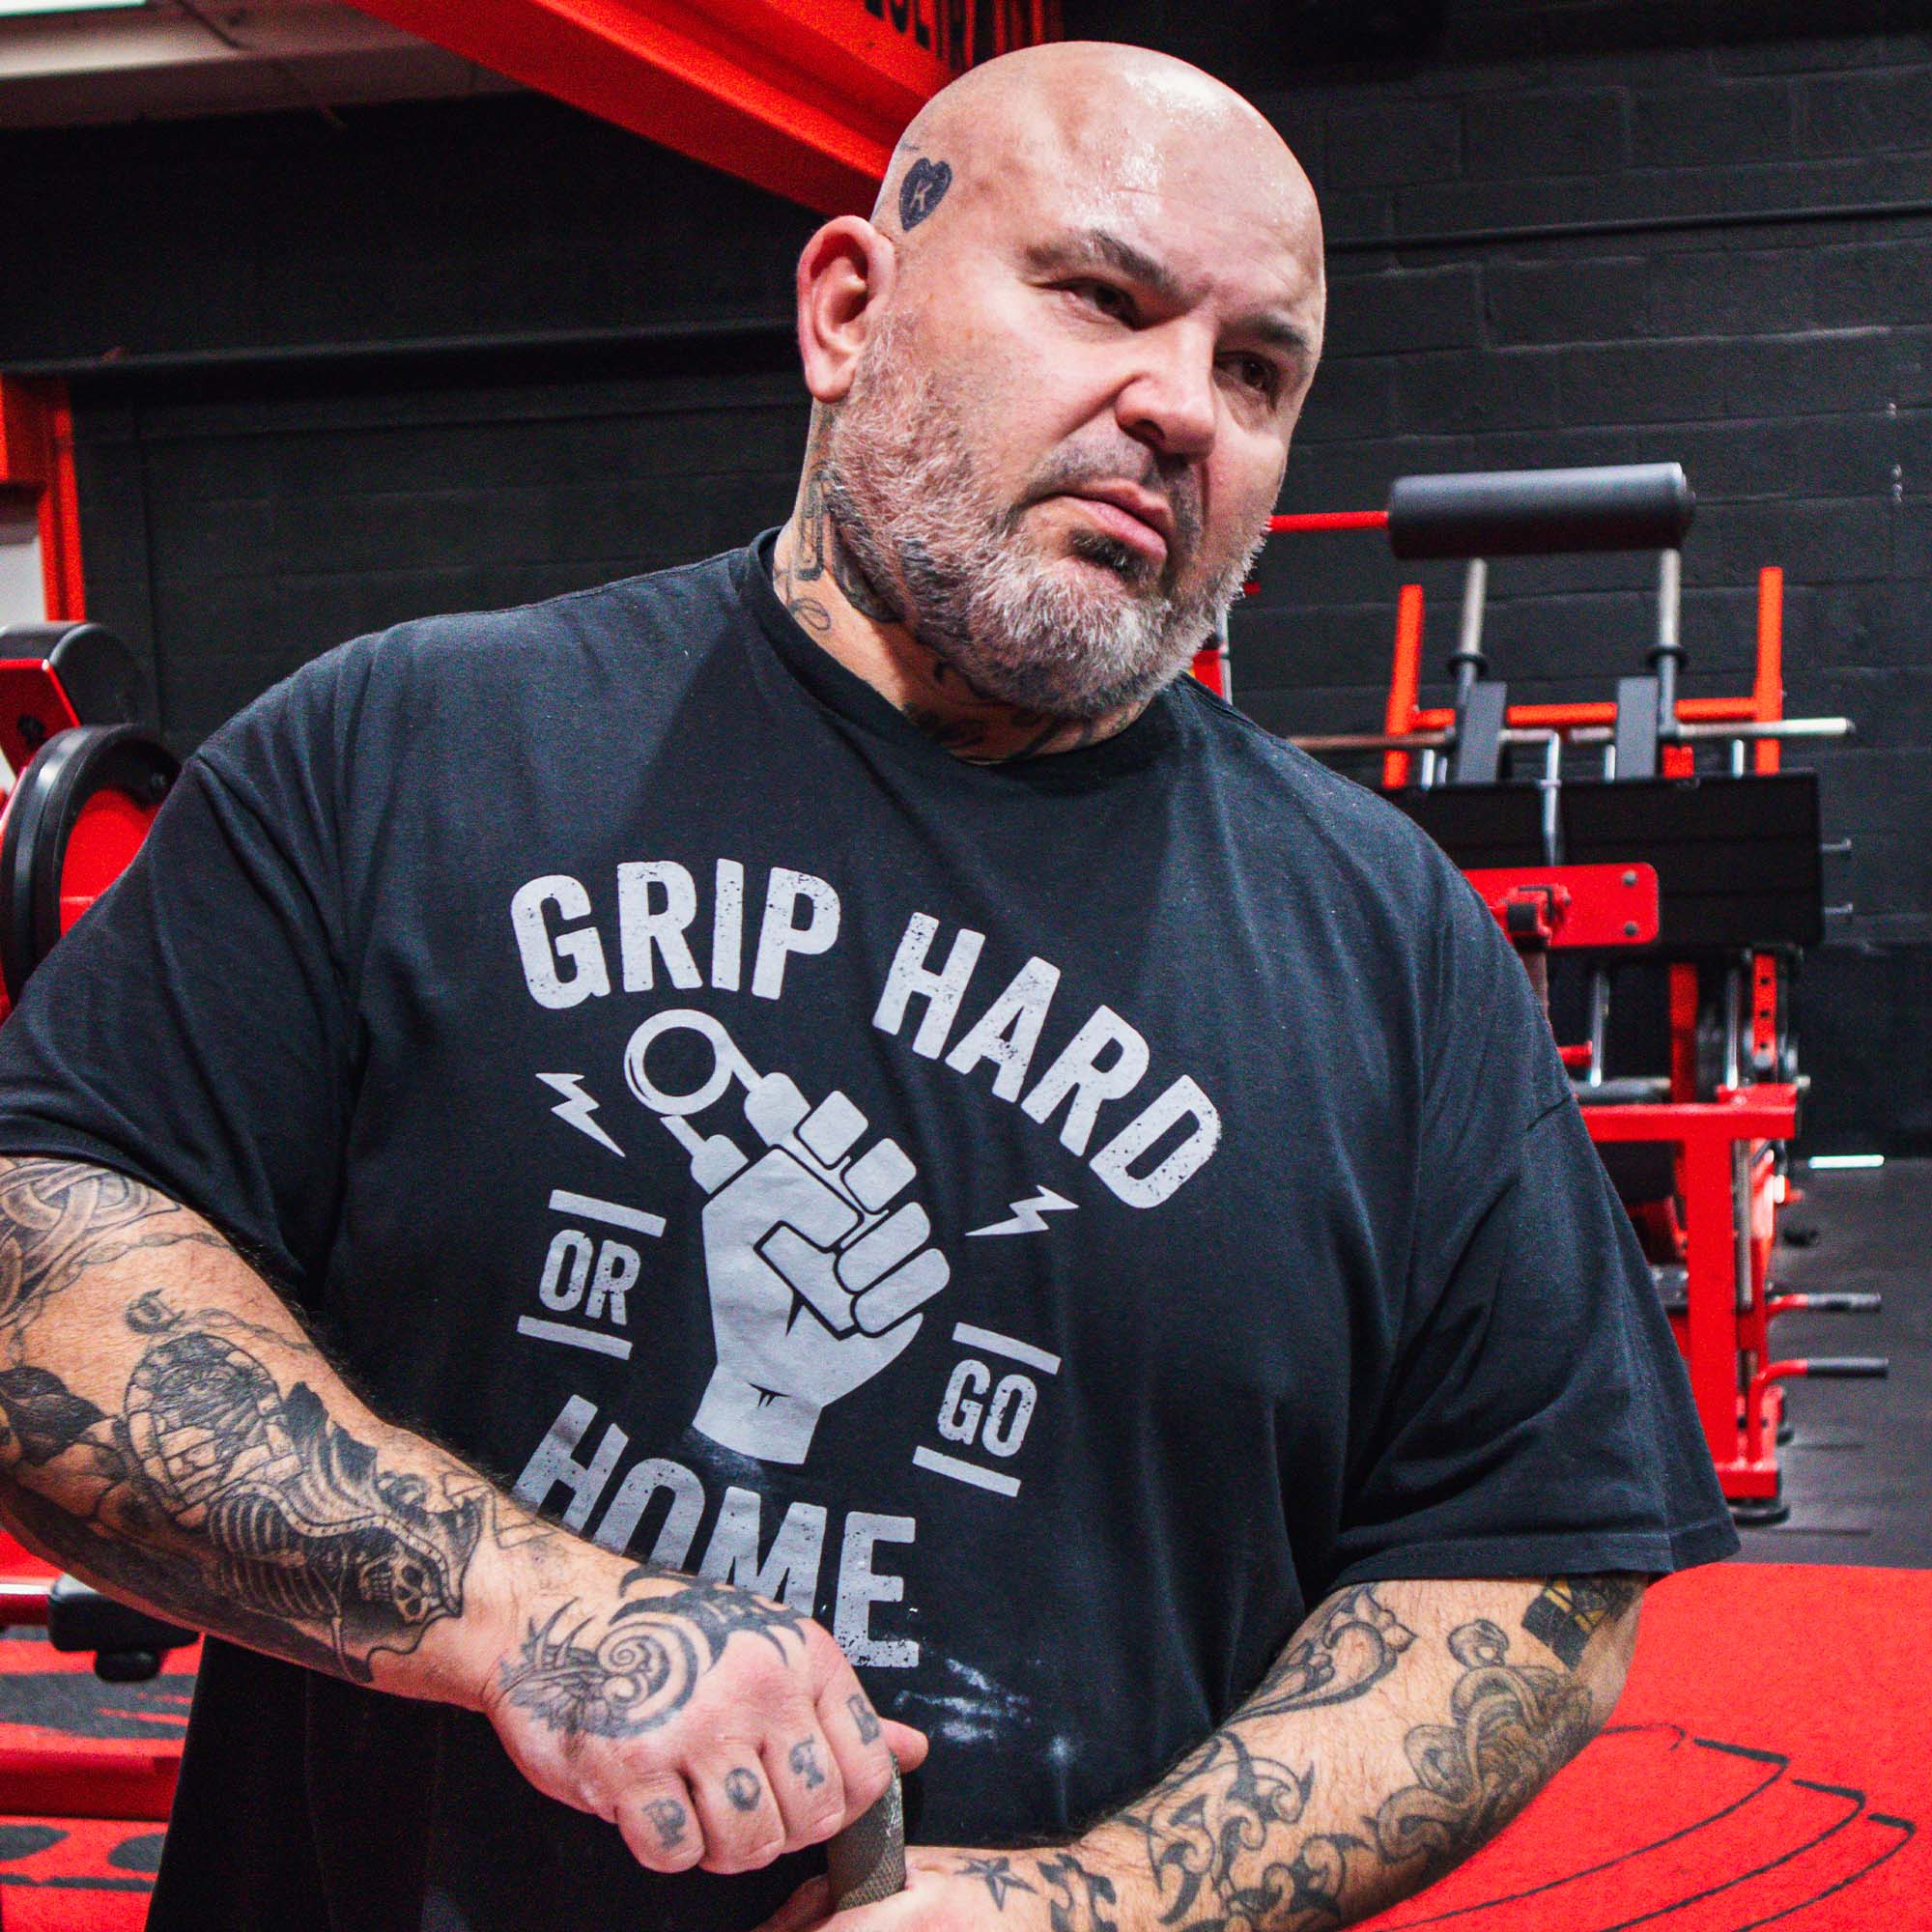 Grip Hard Or Go Home T-Shirt